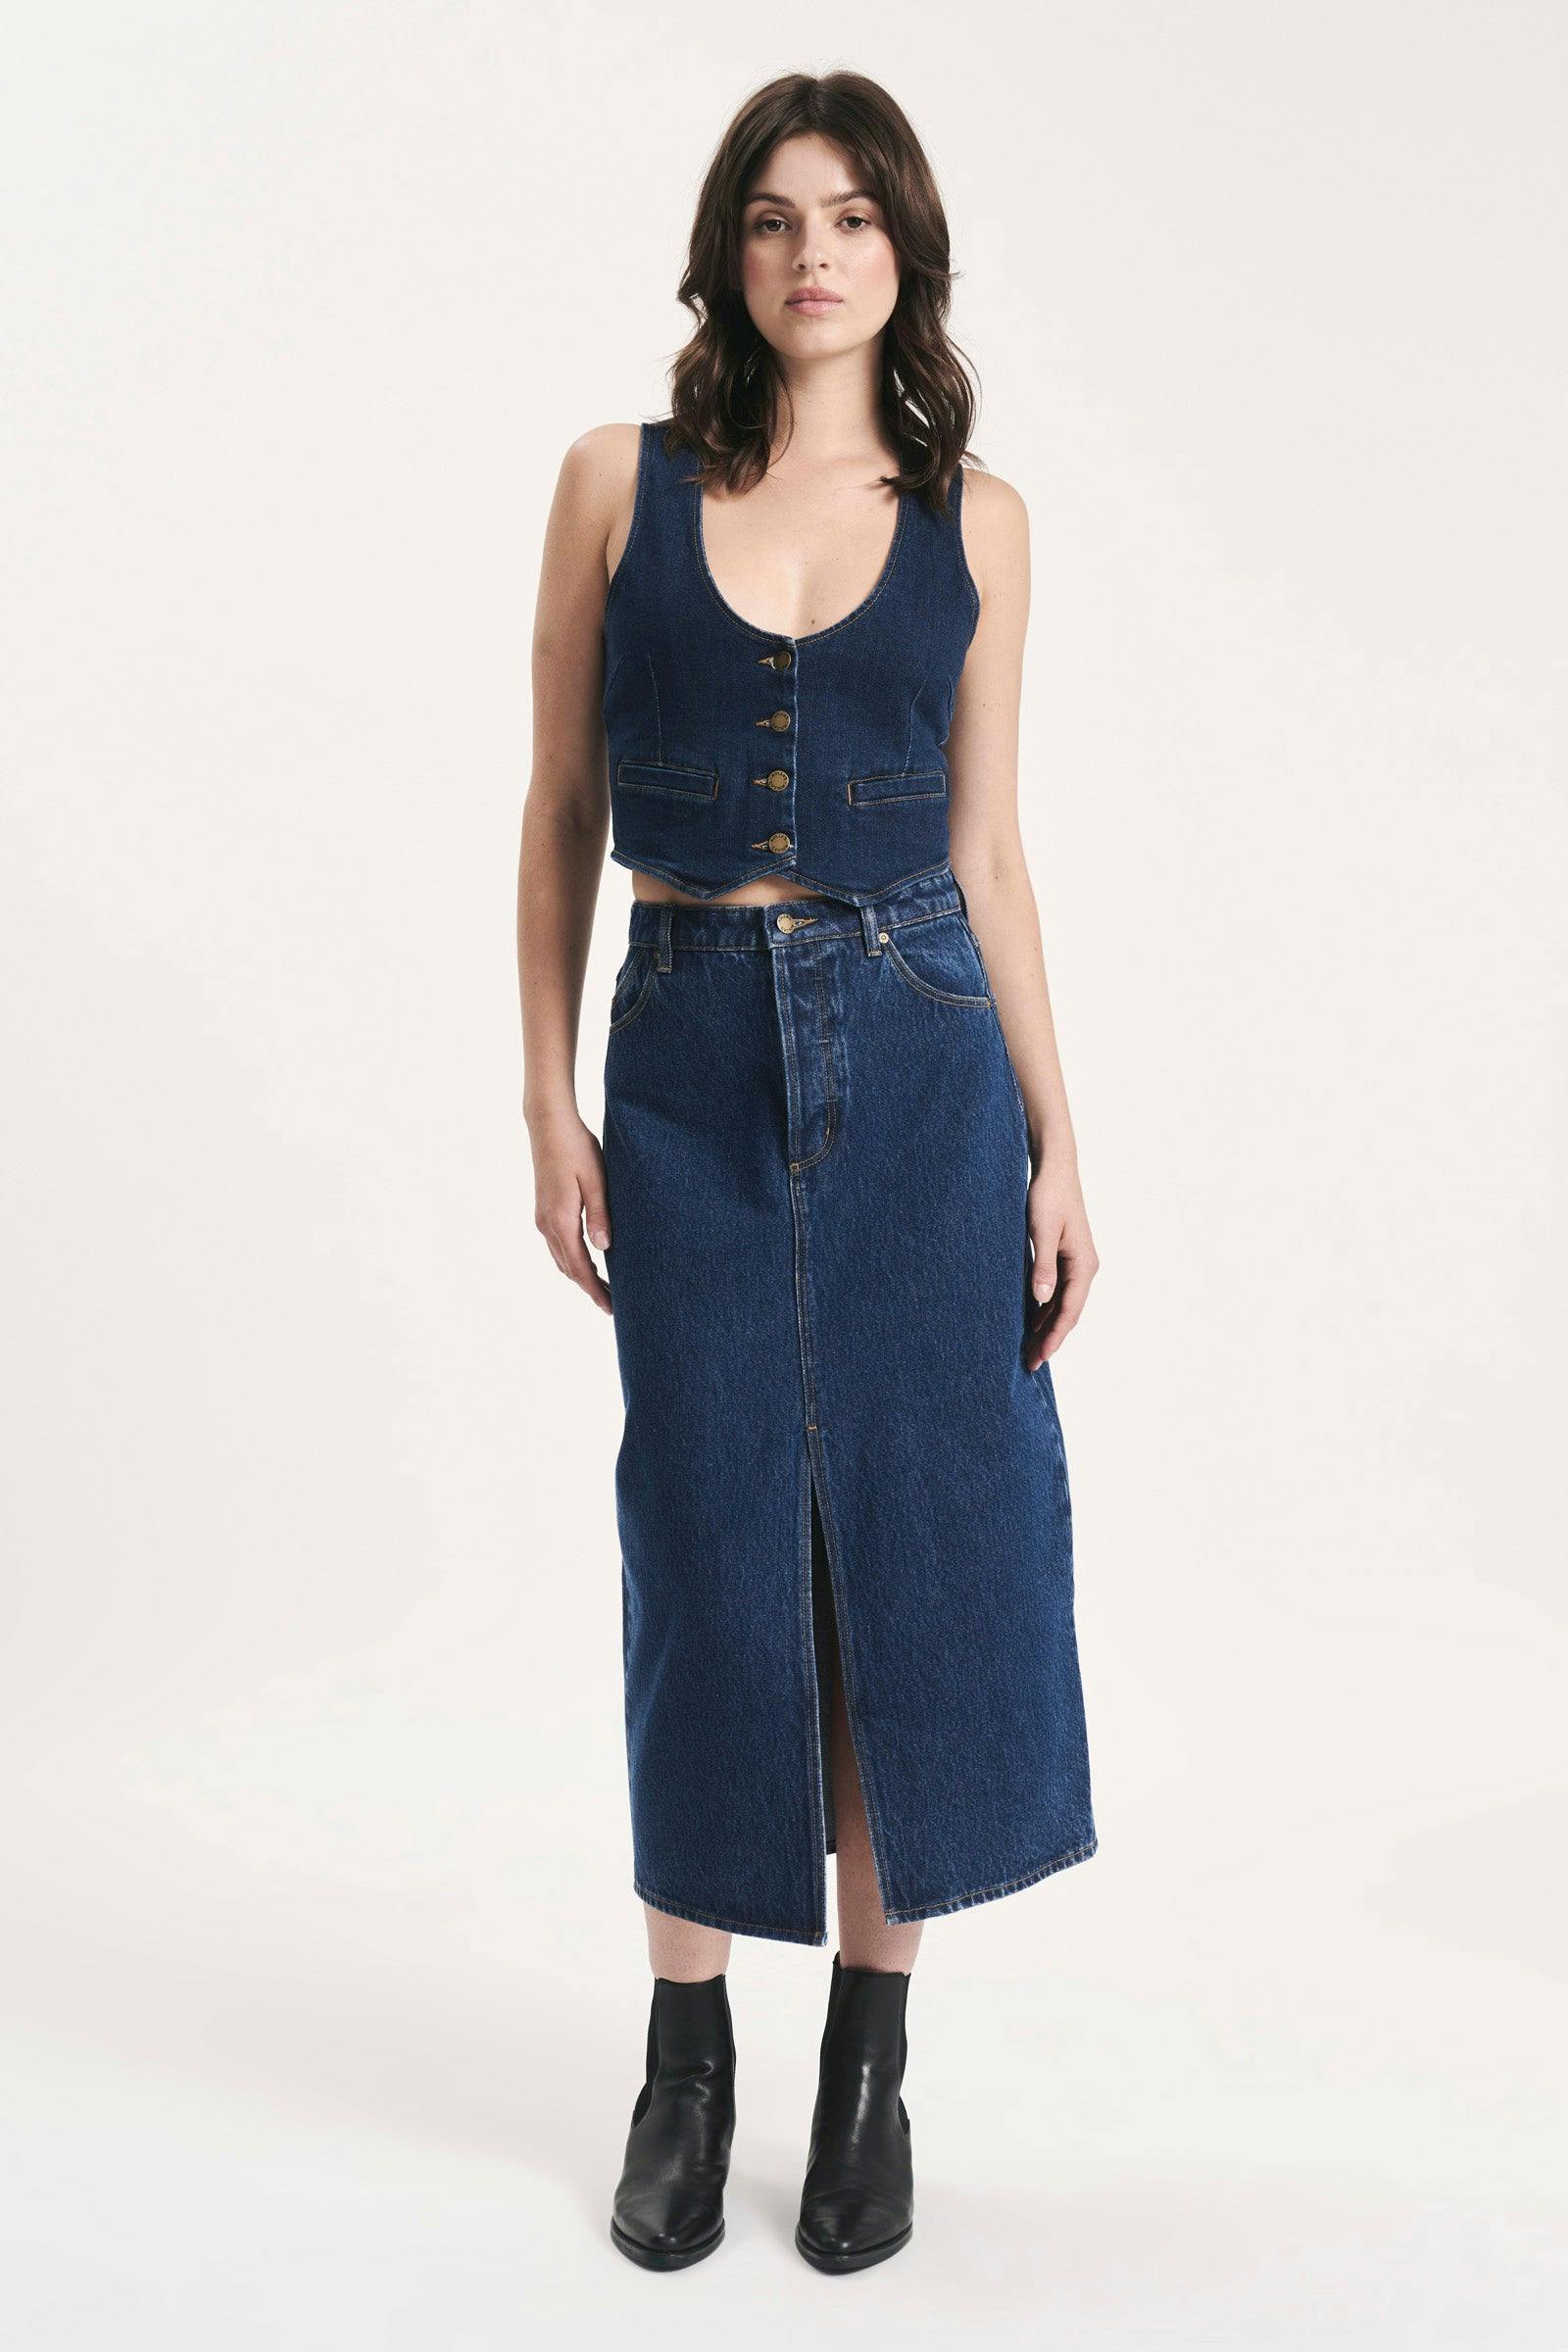 Buy Chicago Skirt - Alina Organic Online | Rollas Jeans